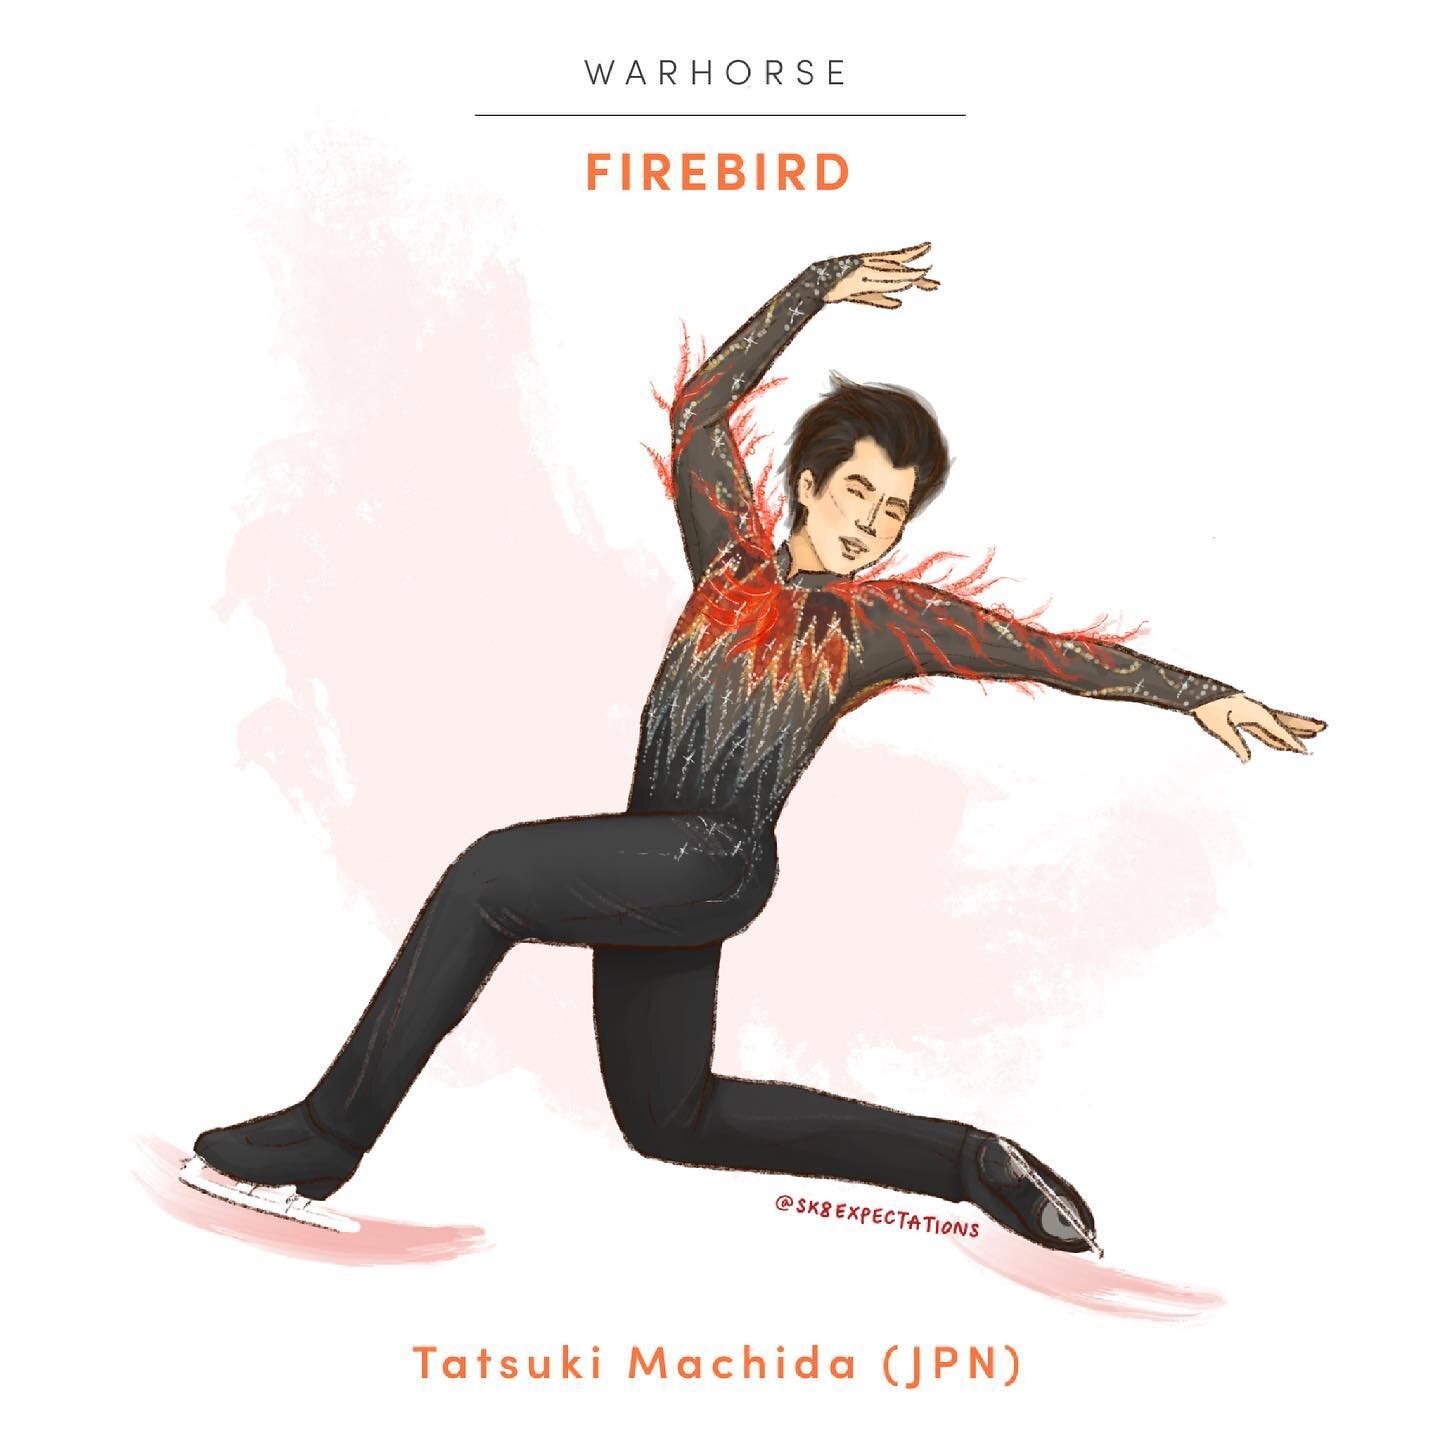 WARHORSE: &ldquo;The Firebird&rdquo; (Igor Stravinsky)
- 
Tatsuki Machida (JPN)
-
2014 ISU World Figure Skating Championships, Free Skate 
-
Choreographed by Philip Mills
-
Controversial opinion - I think Tatsuki Machida should&rsquo;ve won Worlds in